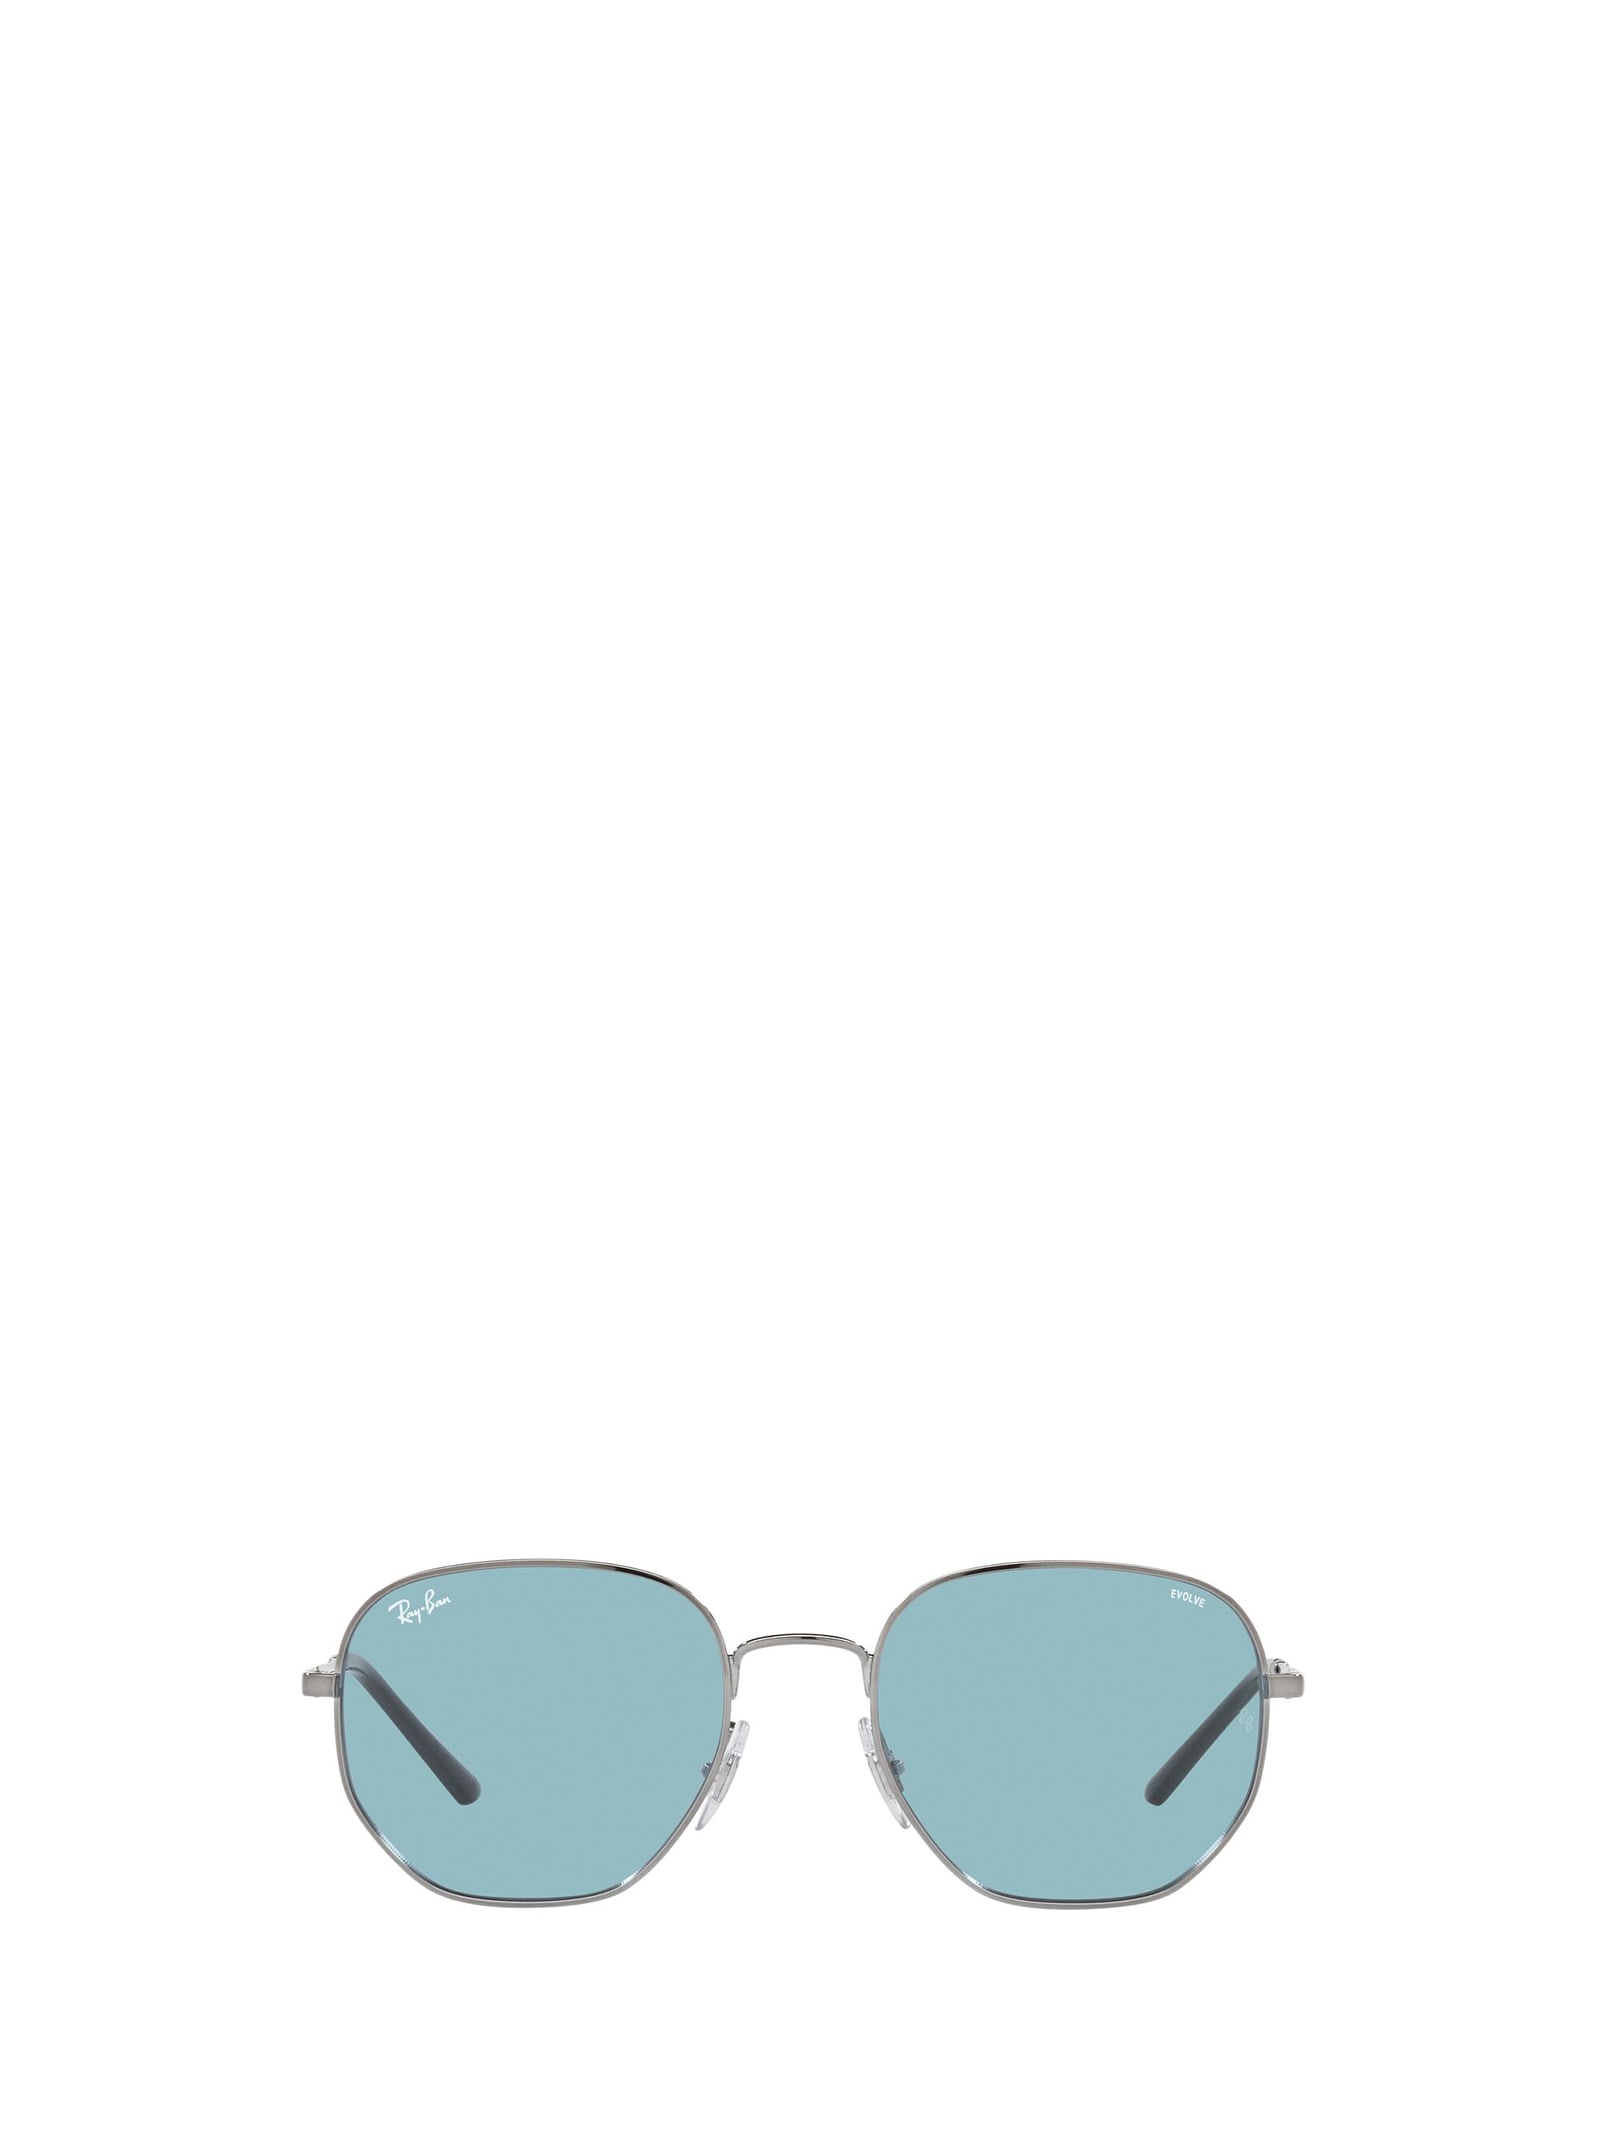 Ray-Ban Rb3682 Gunmetal Sunglasses